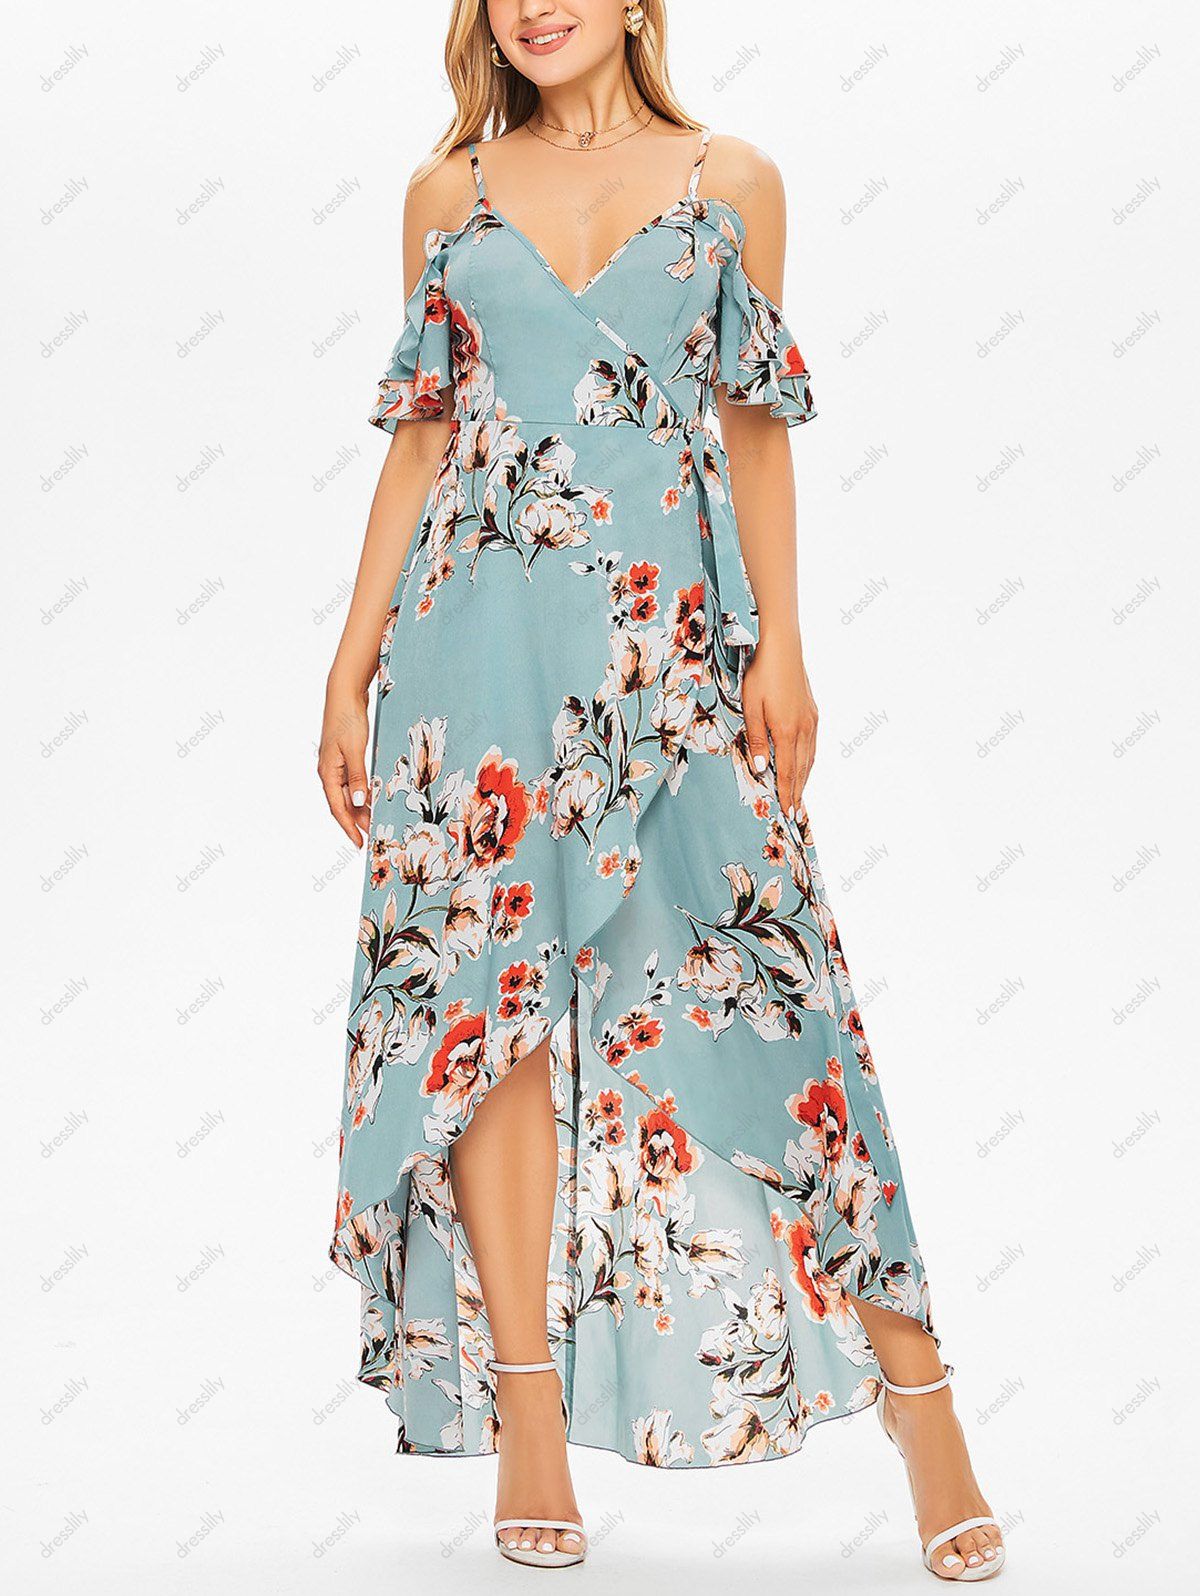 Vacation Chiffon Layered Dress Wrap Rose Flower Print Cold Shoulder Self Belted A Line Maxi Dress - LIGHT BLUE M